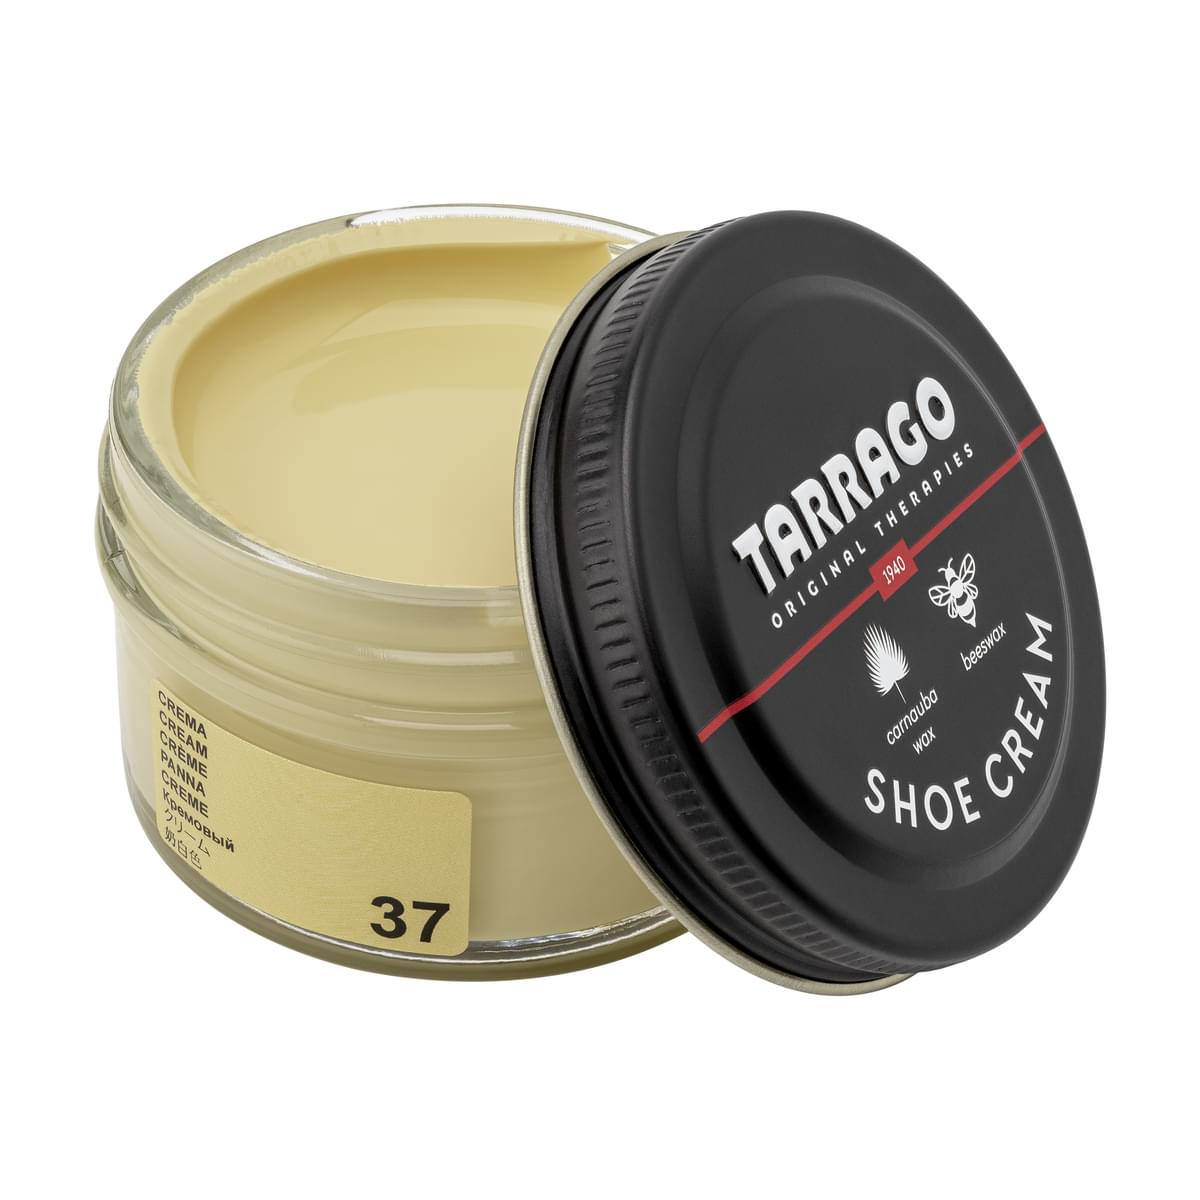 Tarrago Shoe Cream  - Cream - 37